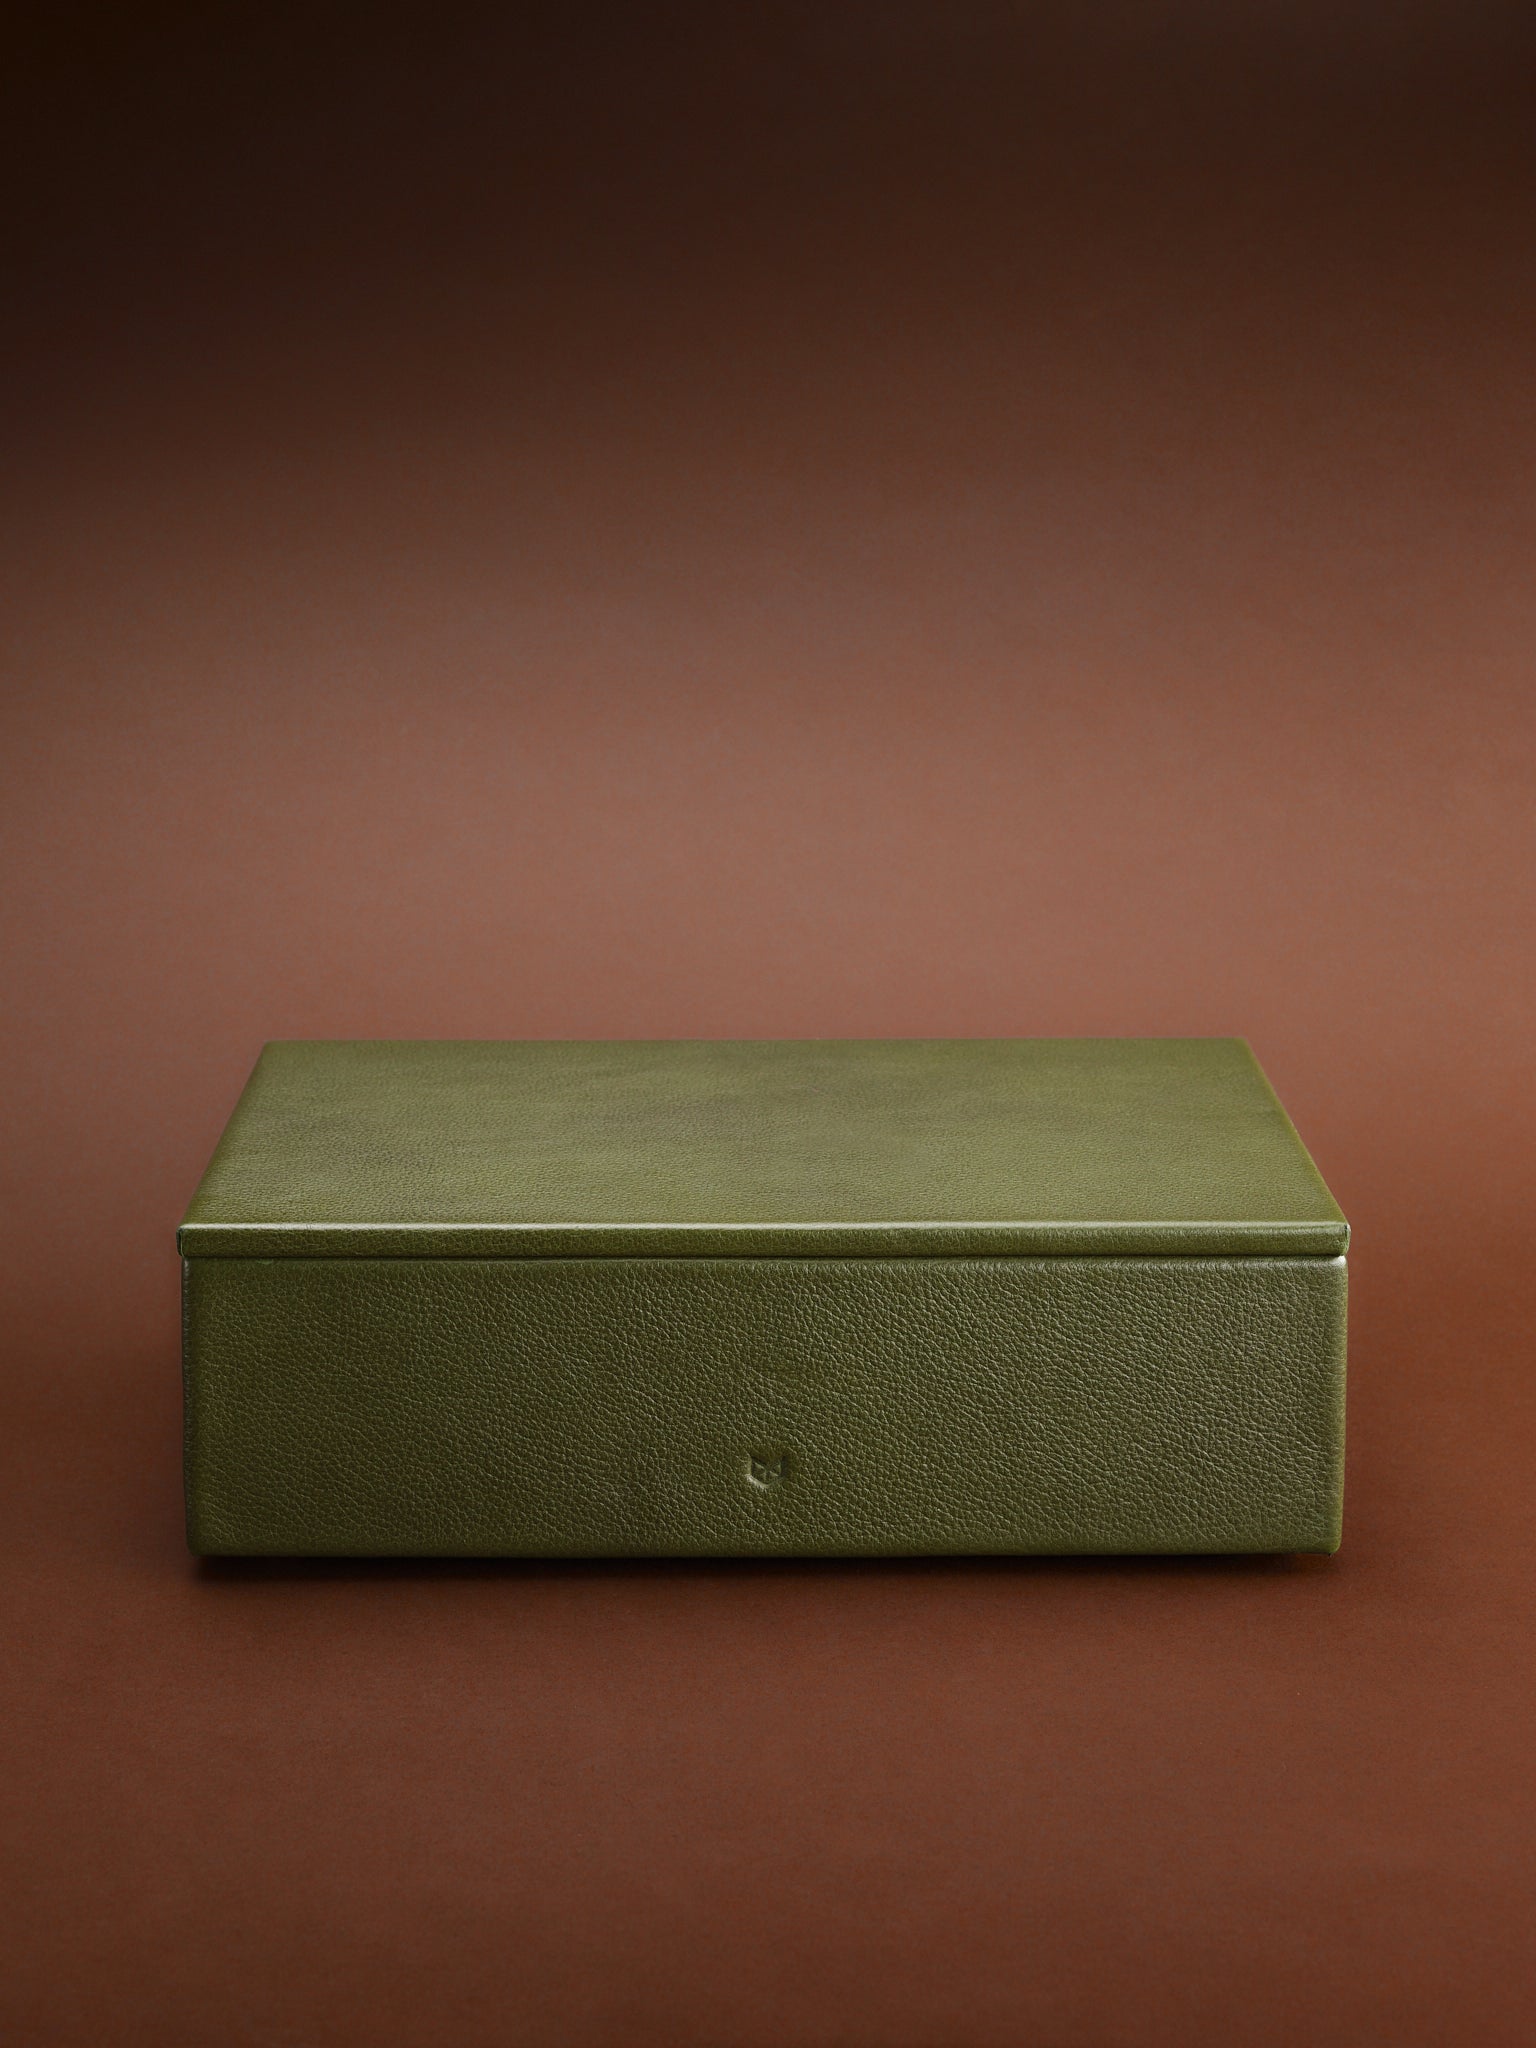 Hard Watch Case. Men's Watch Box Green by Capra Leather